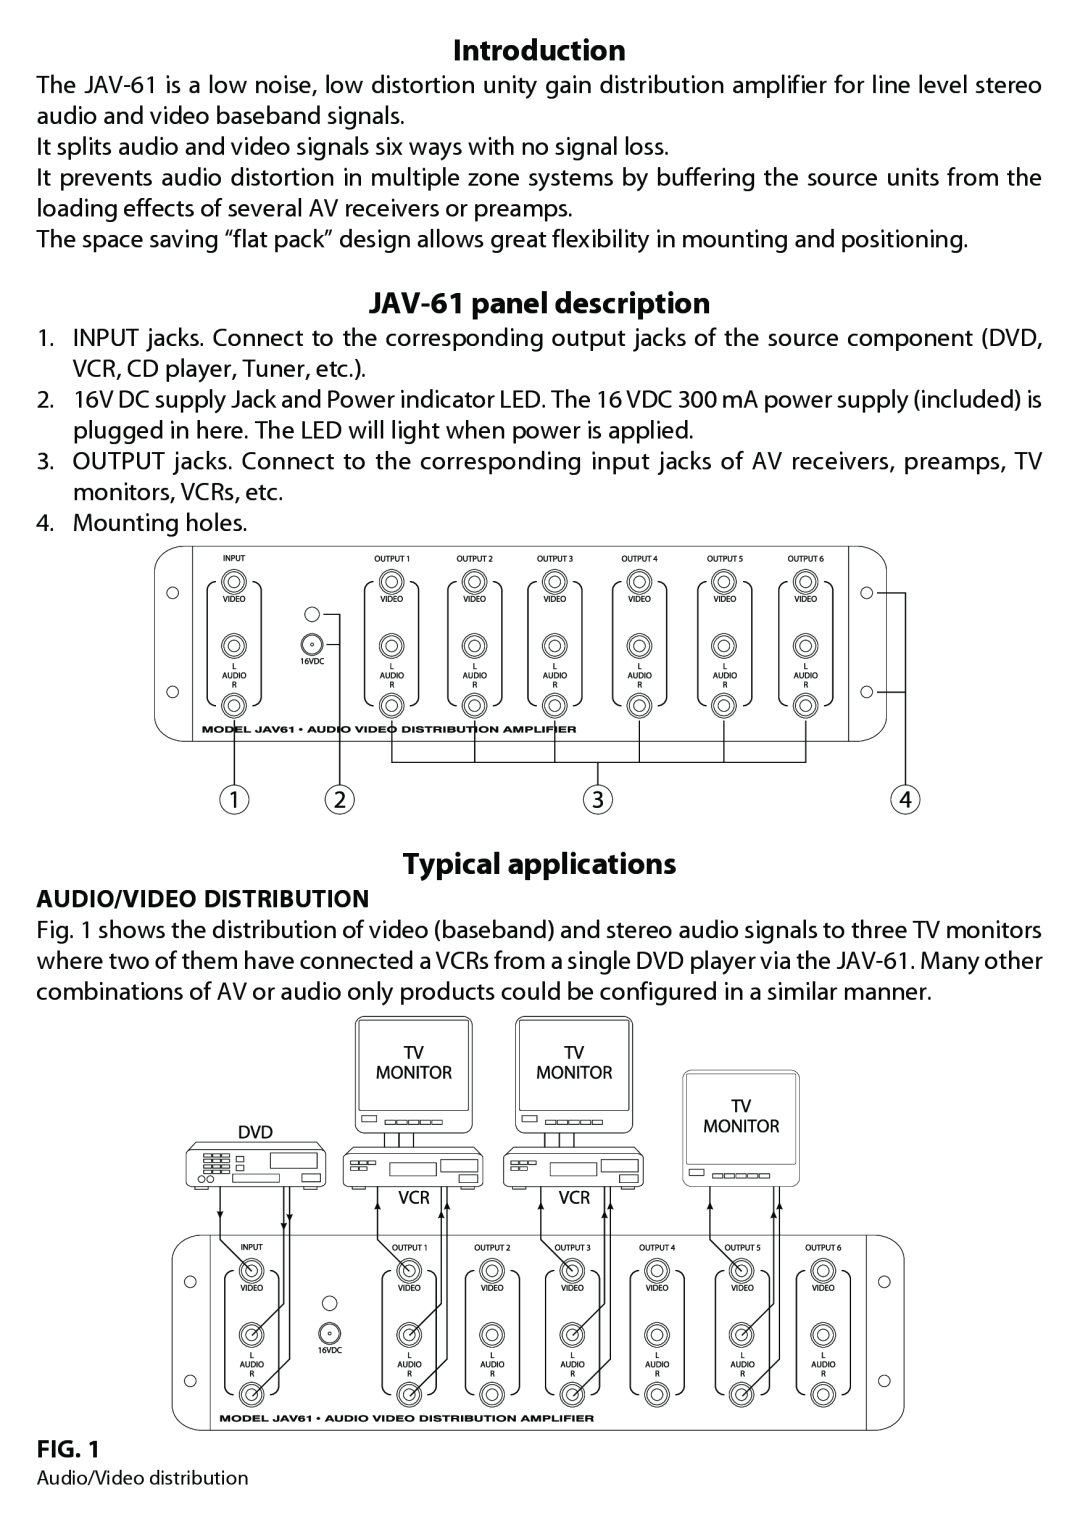 JAMO manual Introduction, JAV-61panel description, Typical applications, Audio/Video Distribution 